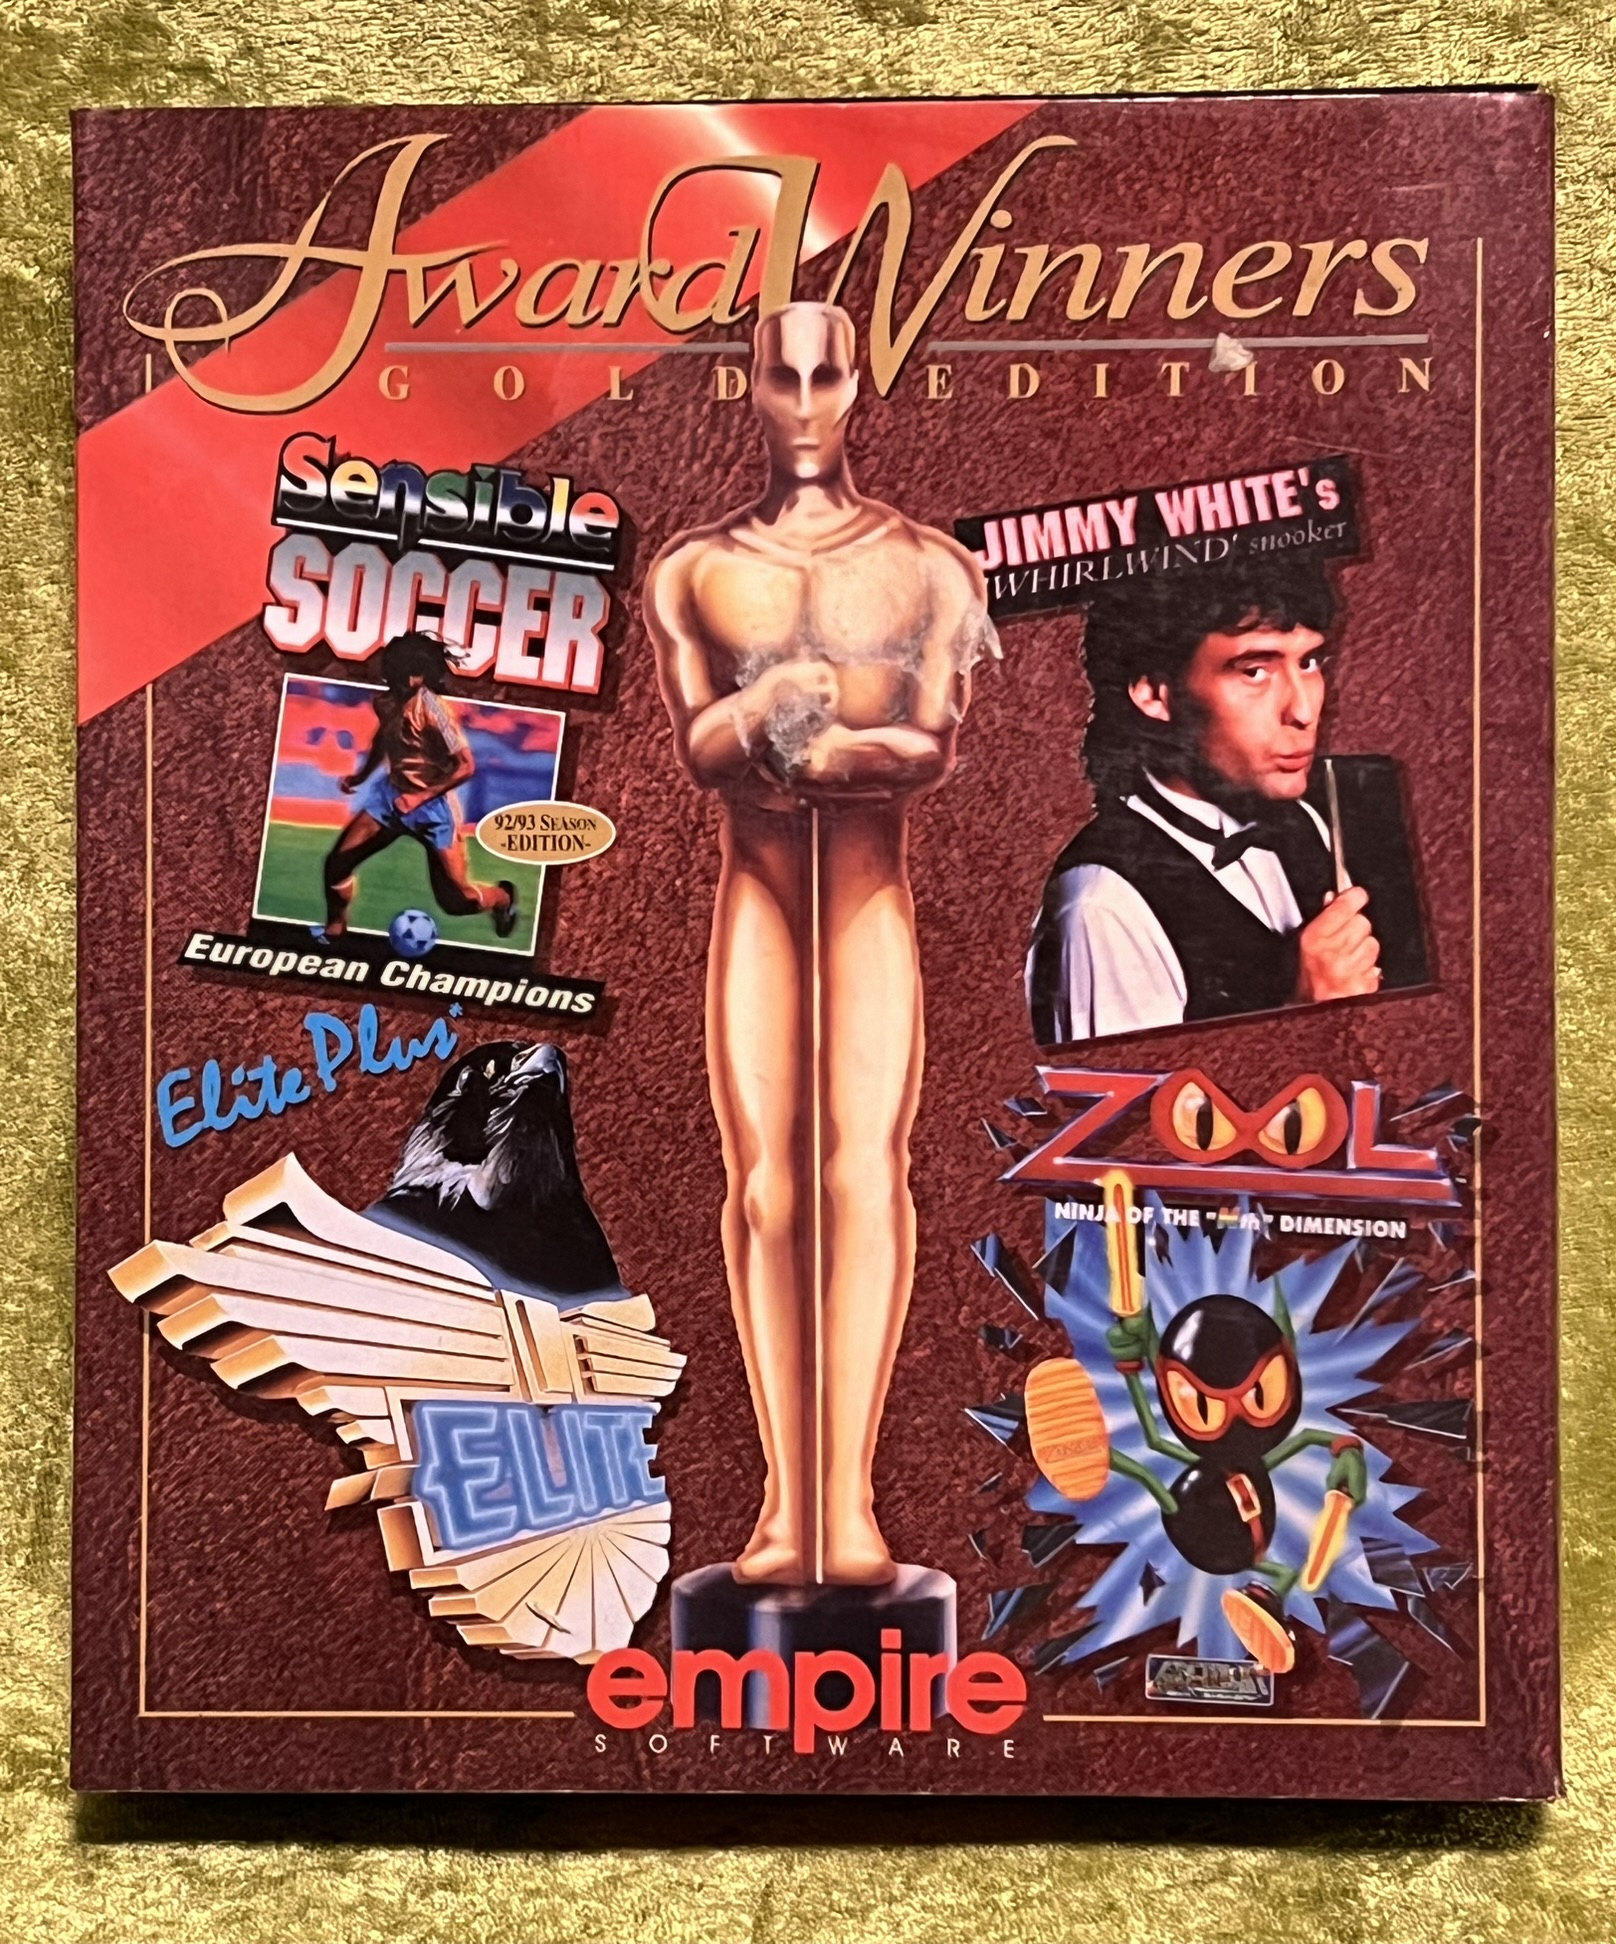 Award Winners Gold Edition